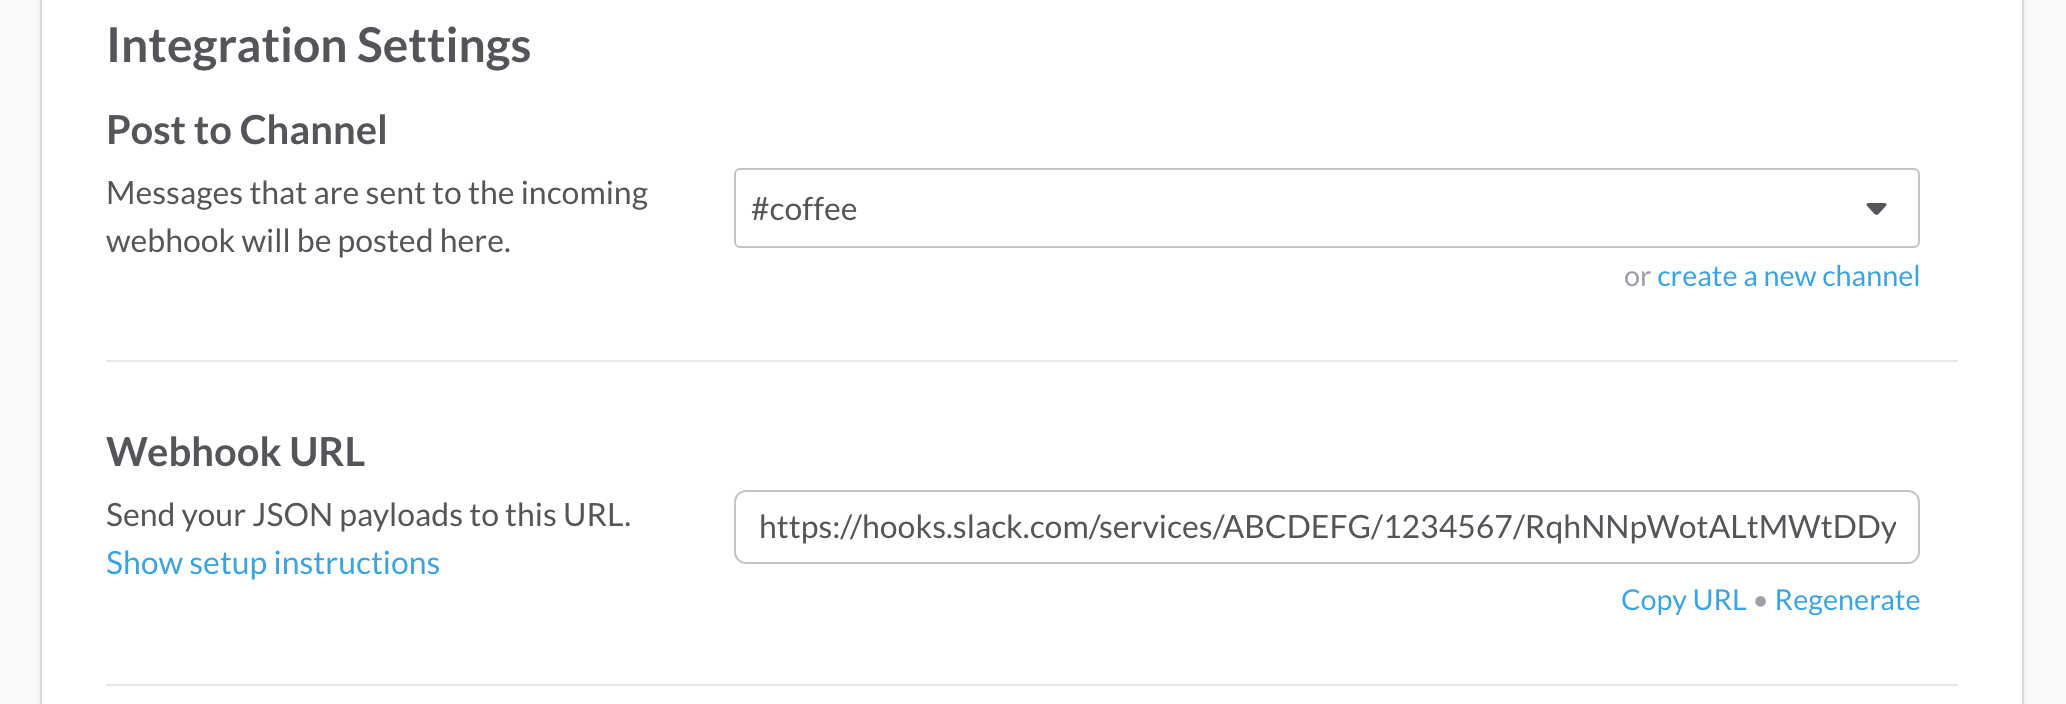 Slack integration configuration screenshot